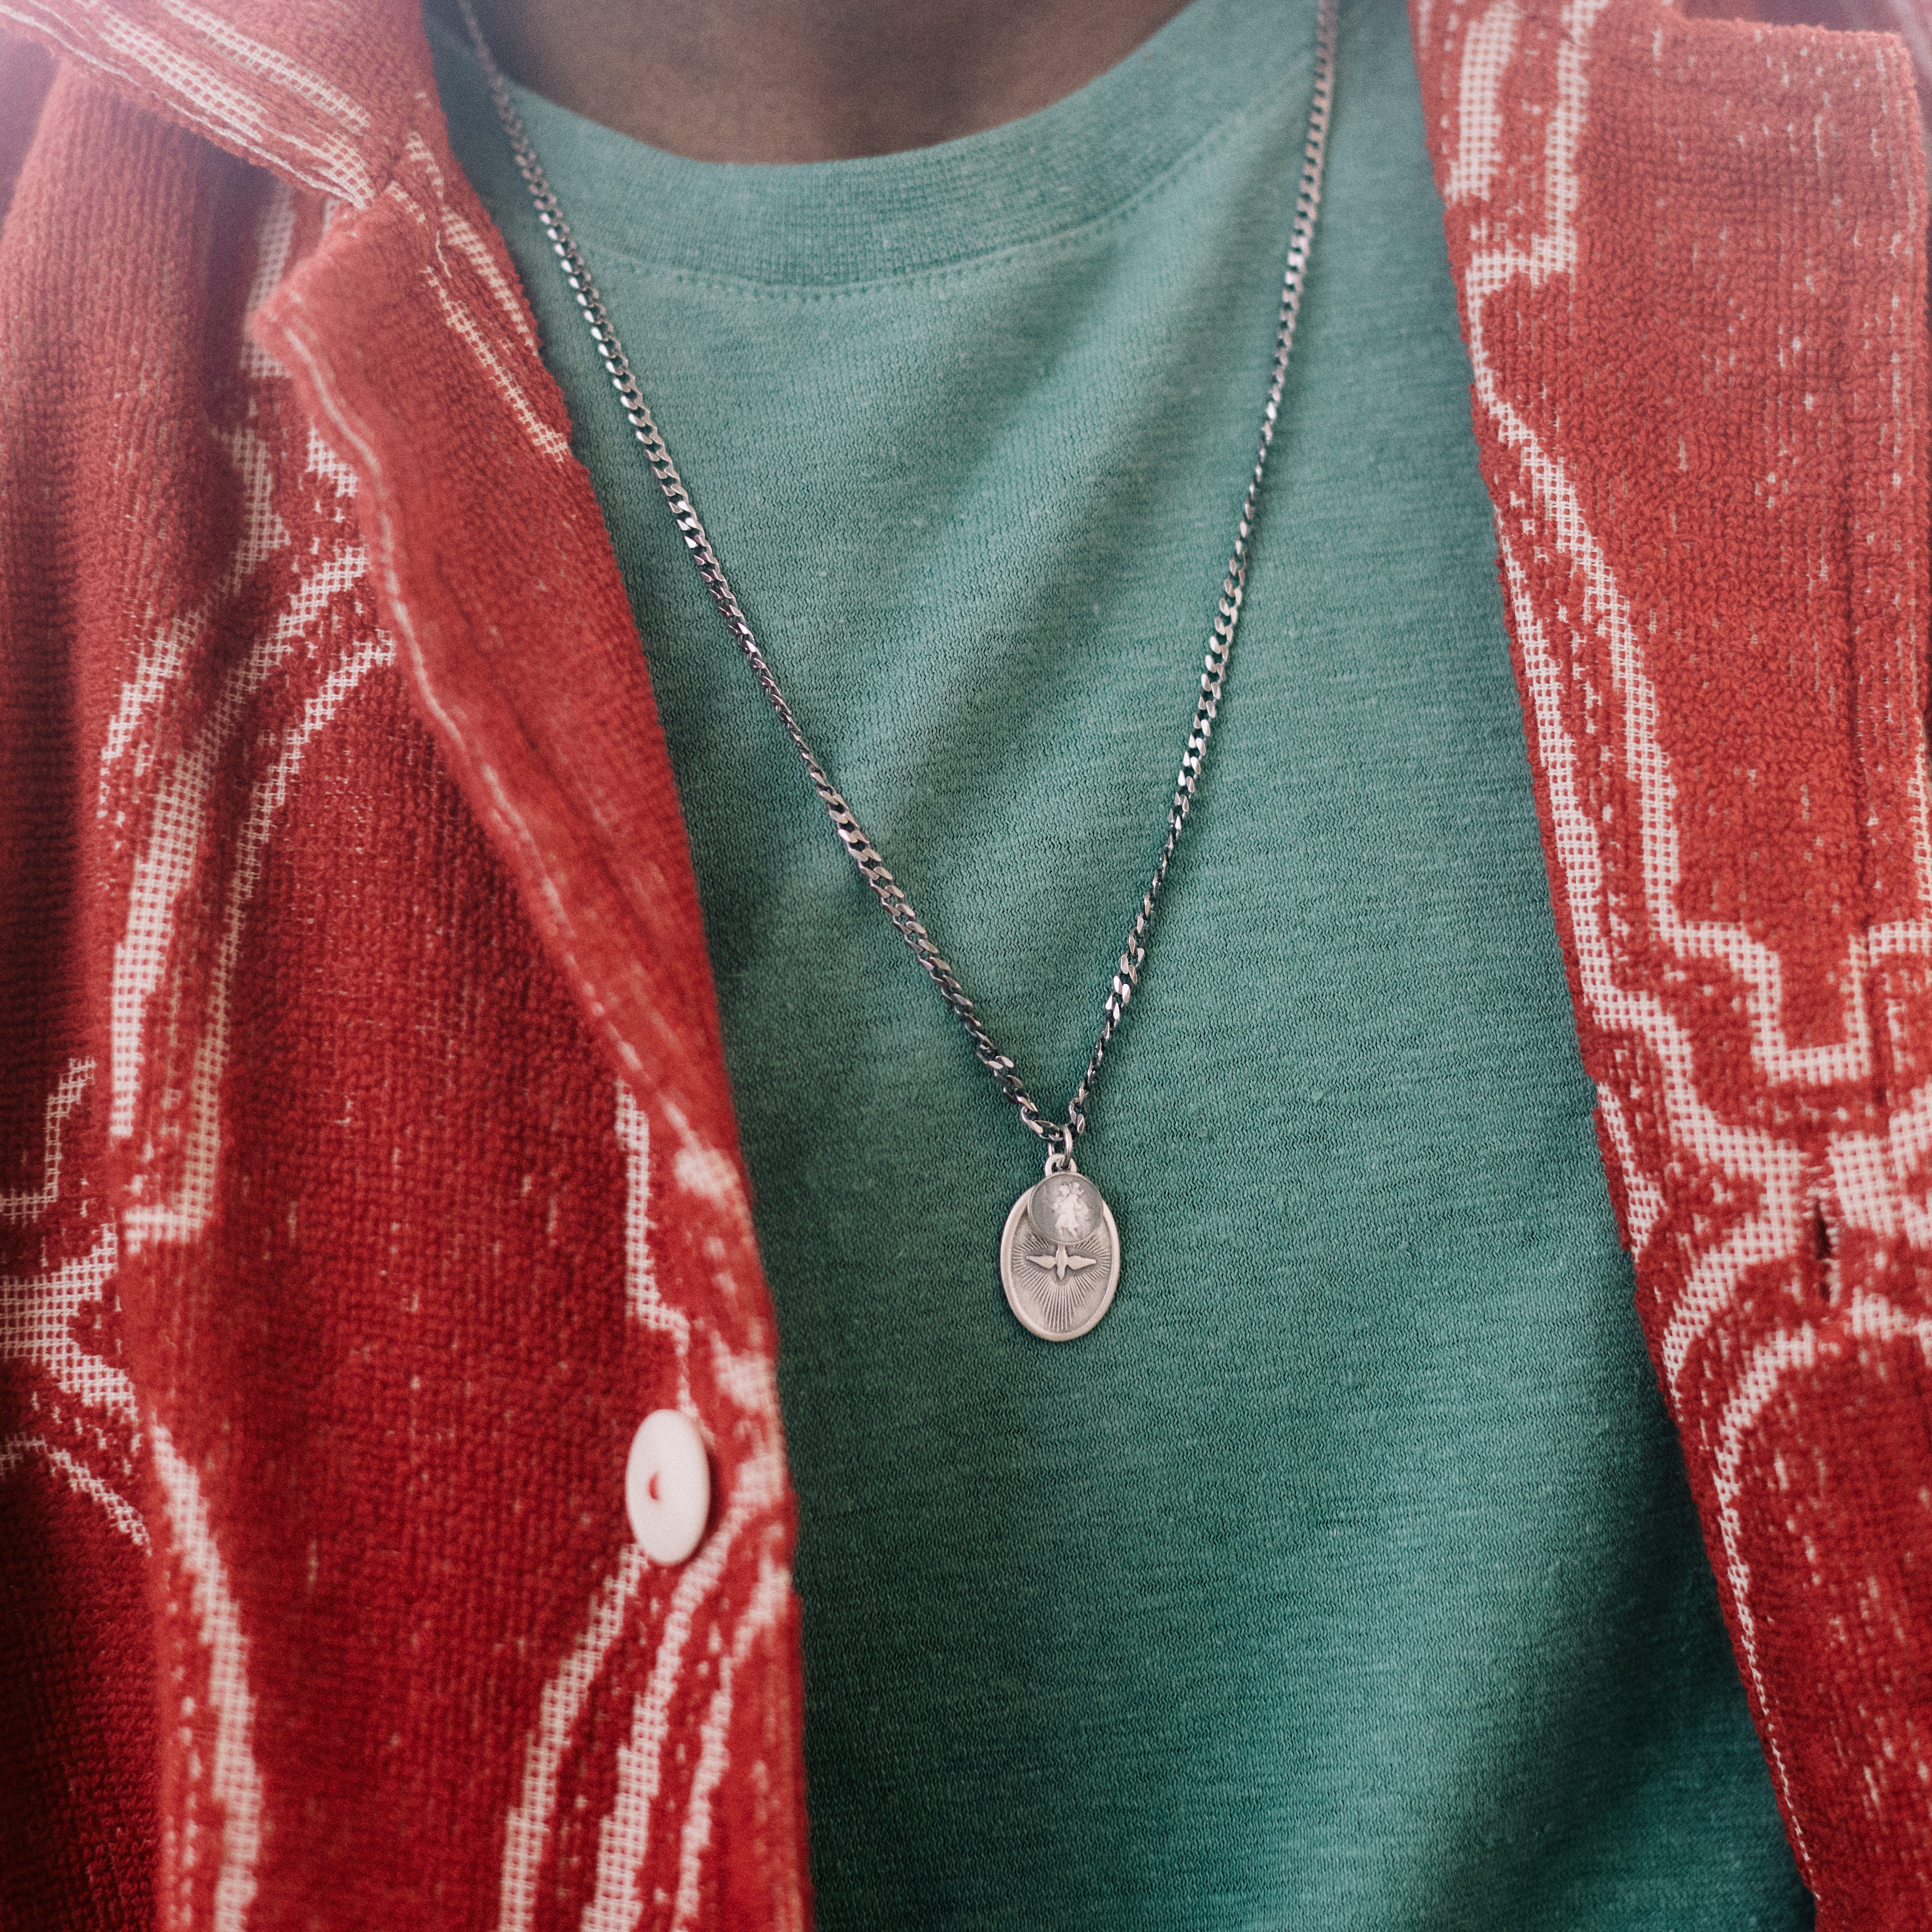 Miansai Dove Pendant Necklace - Sterling Silver, Oxidized | Style